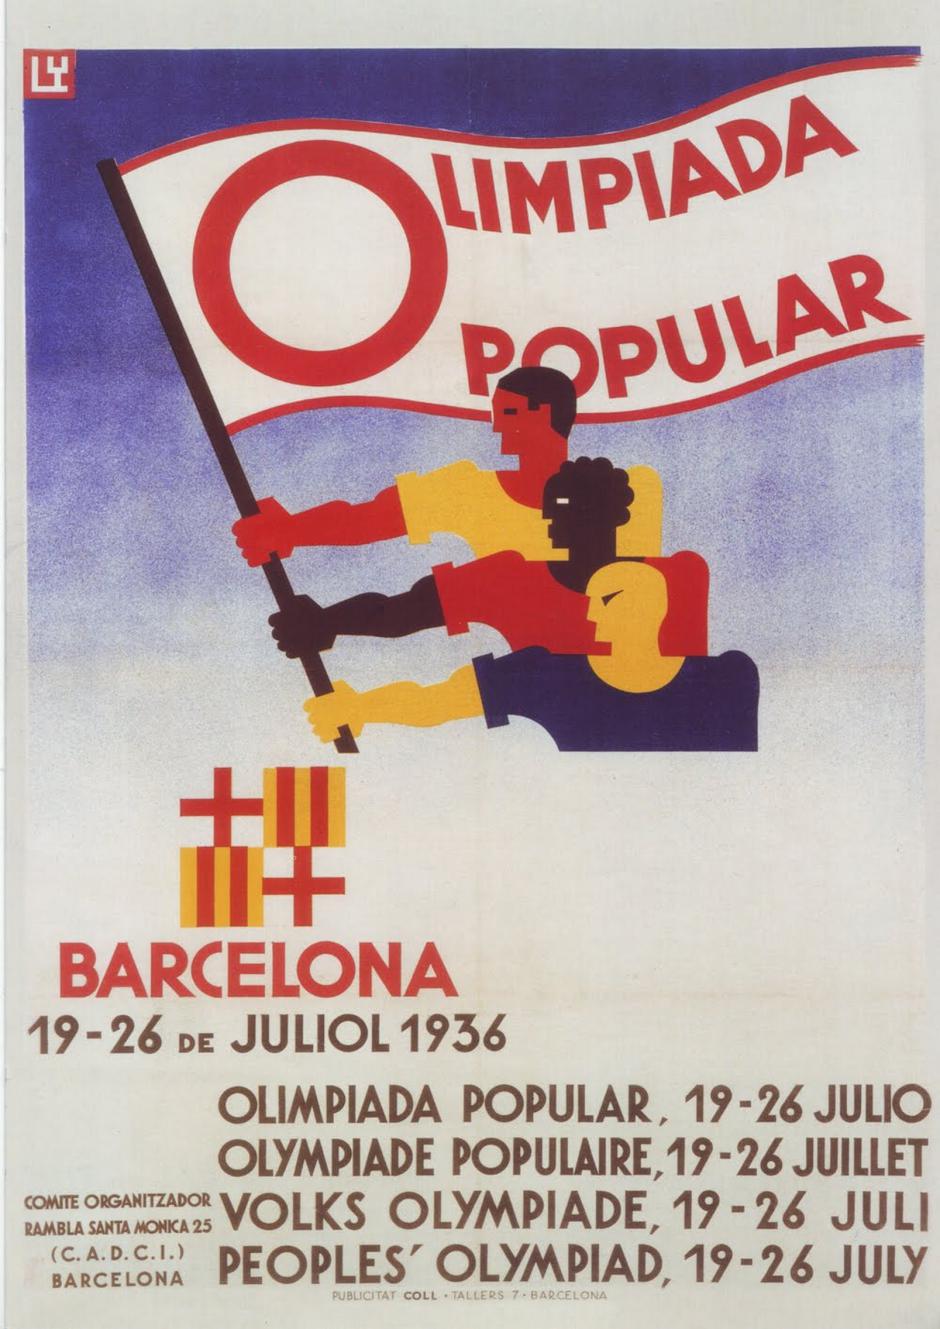 L’olimpiada popular de Barcelona 1936